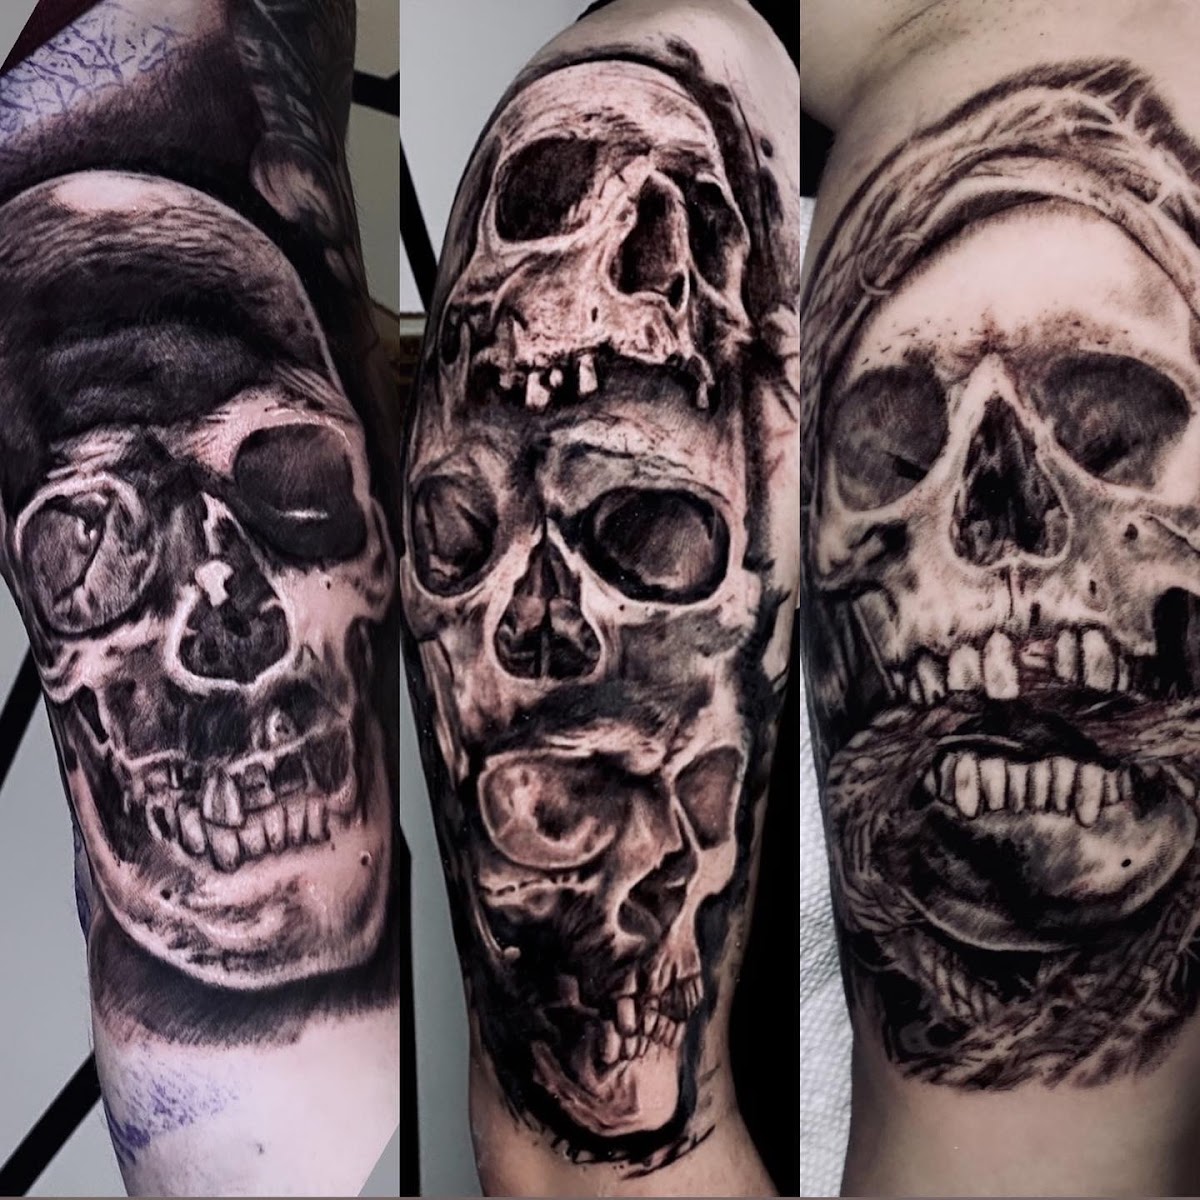 Skull N Bones Tattoo Flash by TheMacRat on DeviantArt